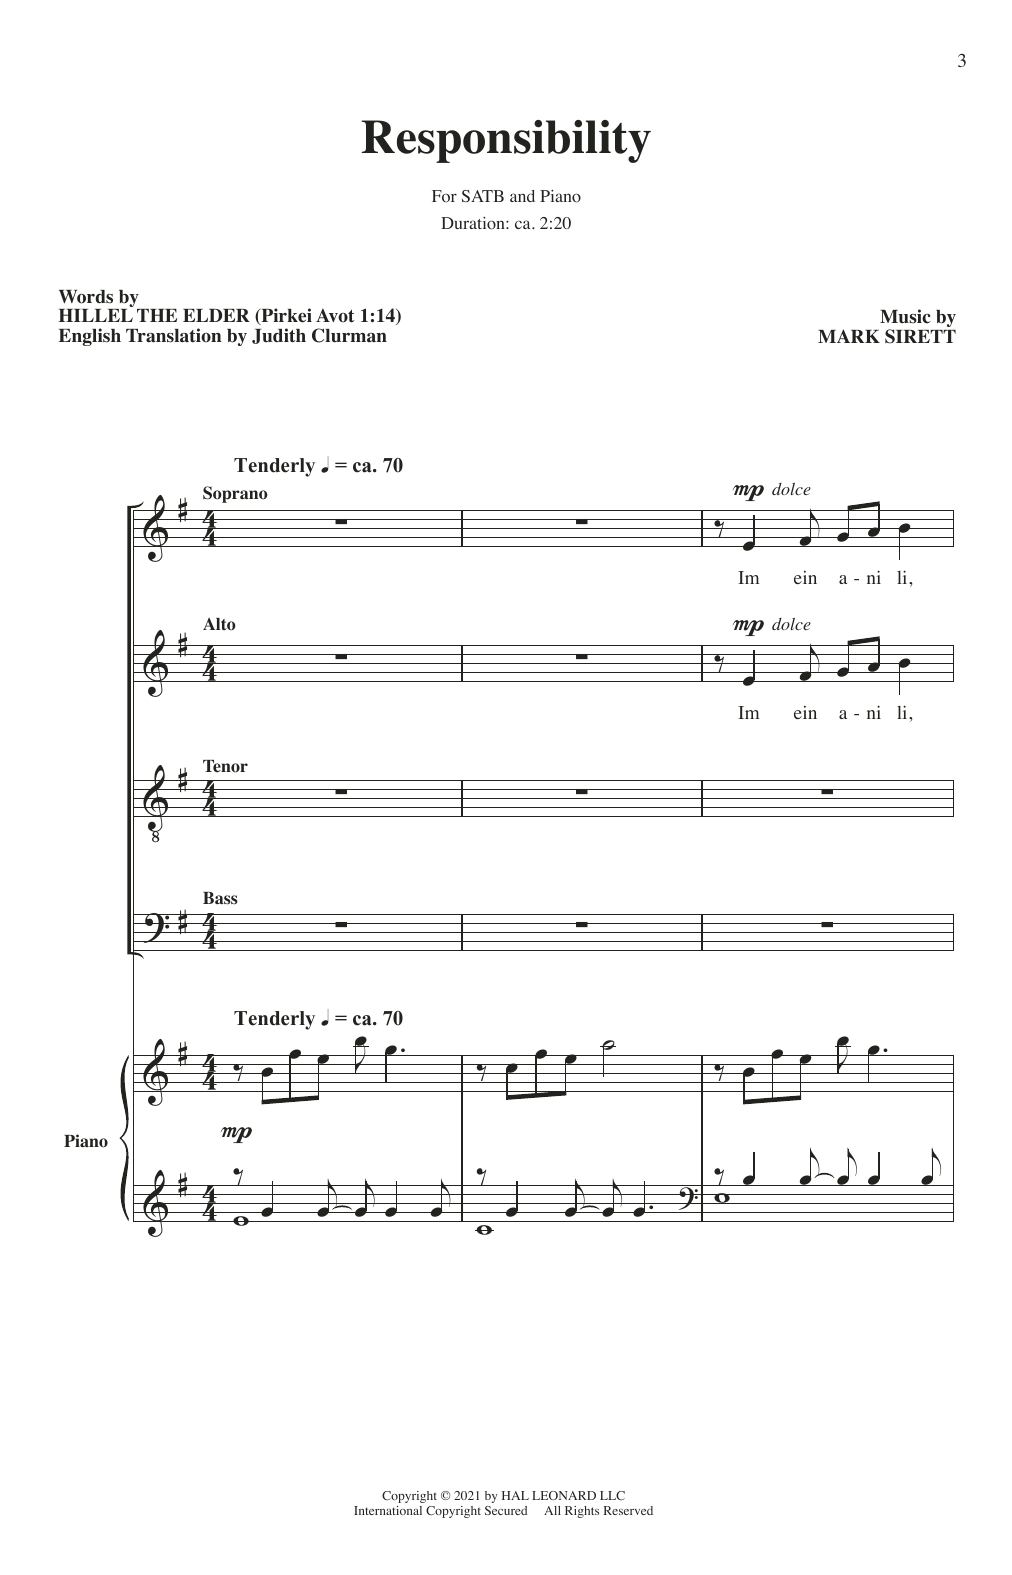 Mark Sirett Responsibility Sheet Music Notes & Chords for SSA Choir - Download or Print PDF